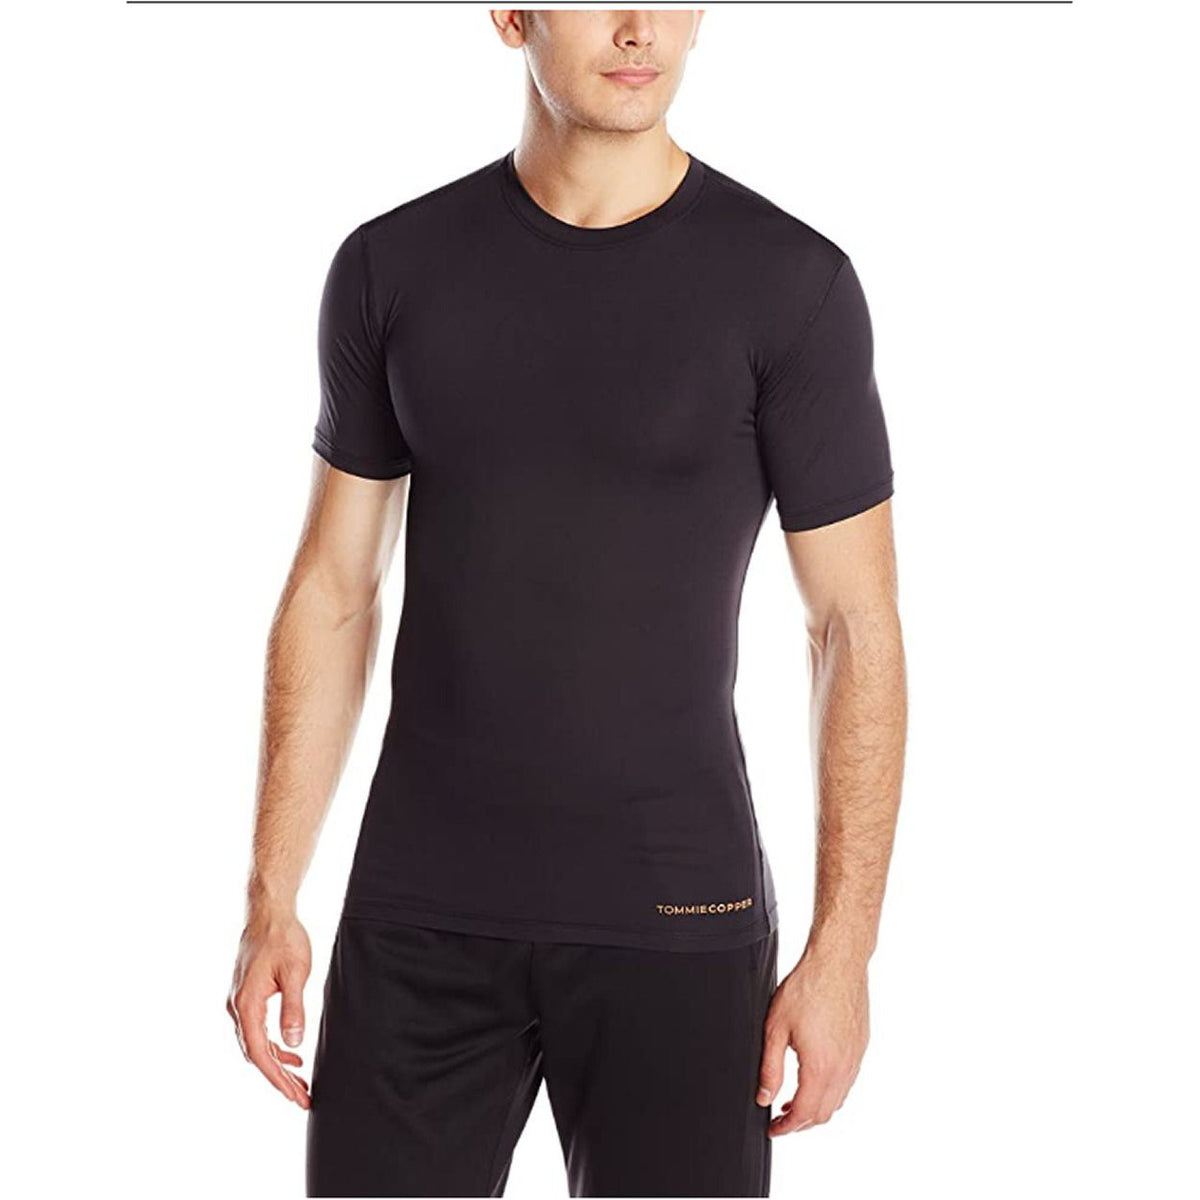 Tommie Copper - compression shirt bundle short sleeve